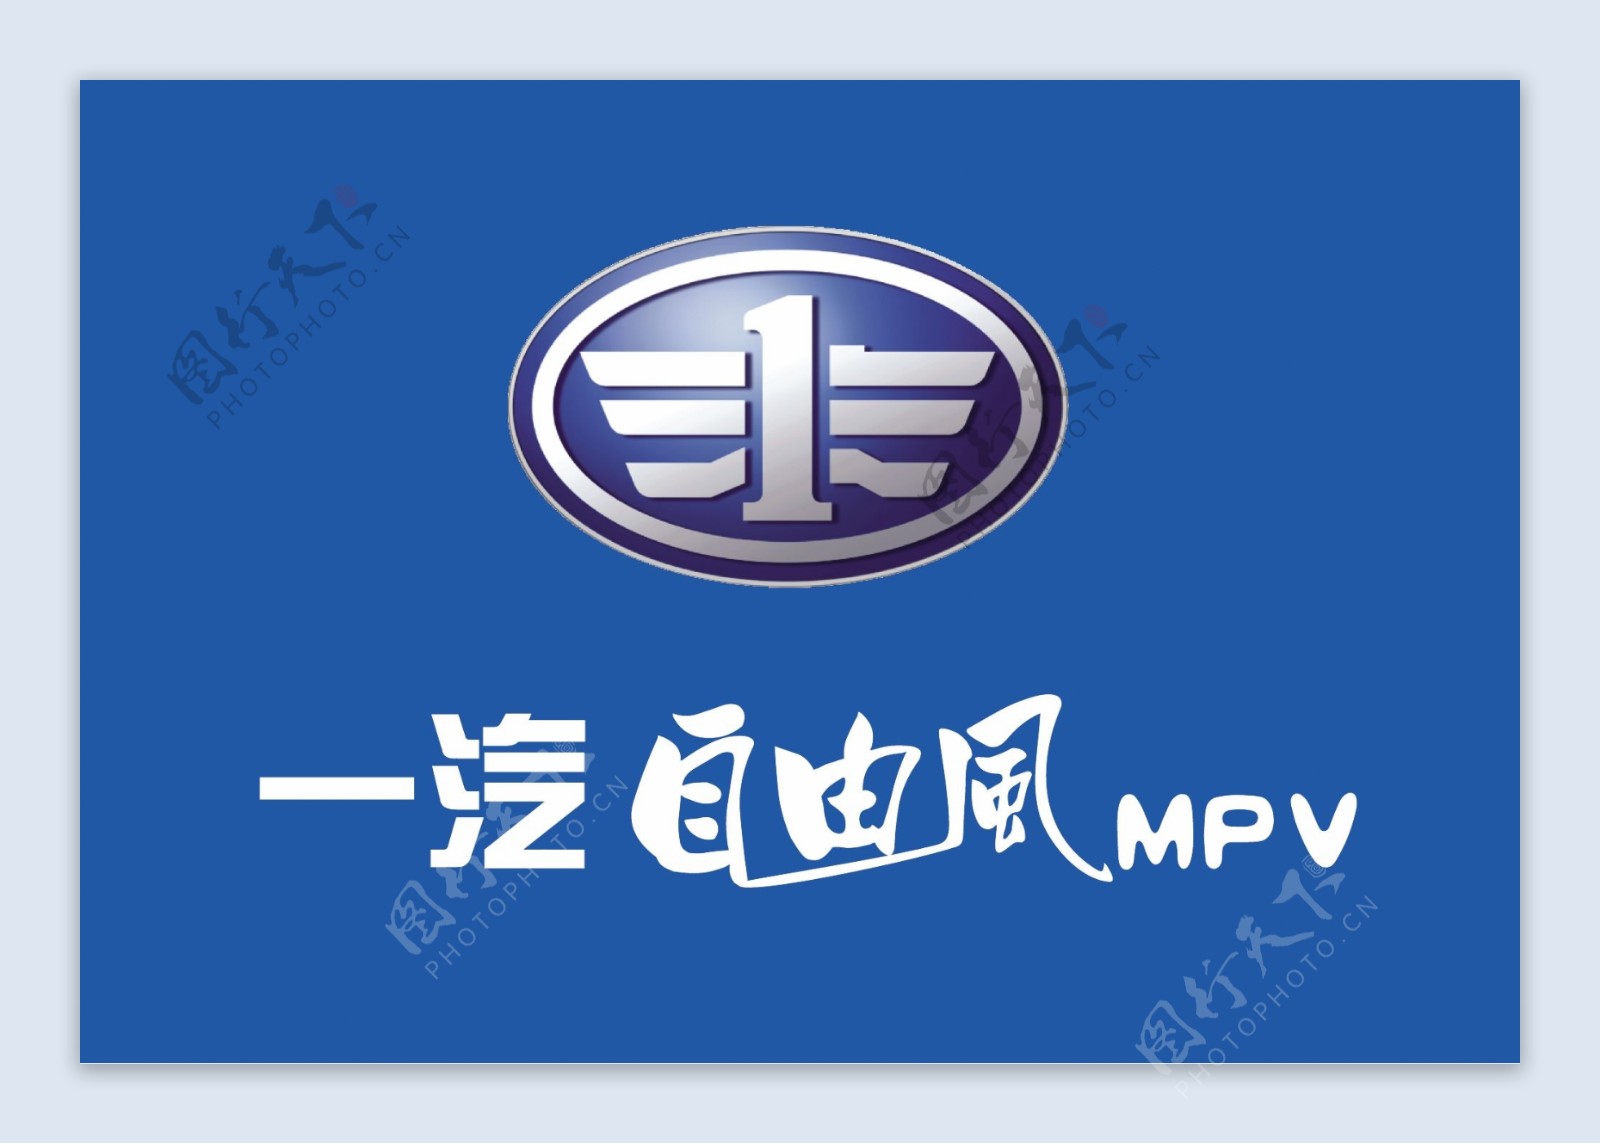 一汽自由风MPV矢量logo